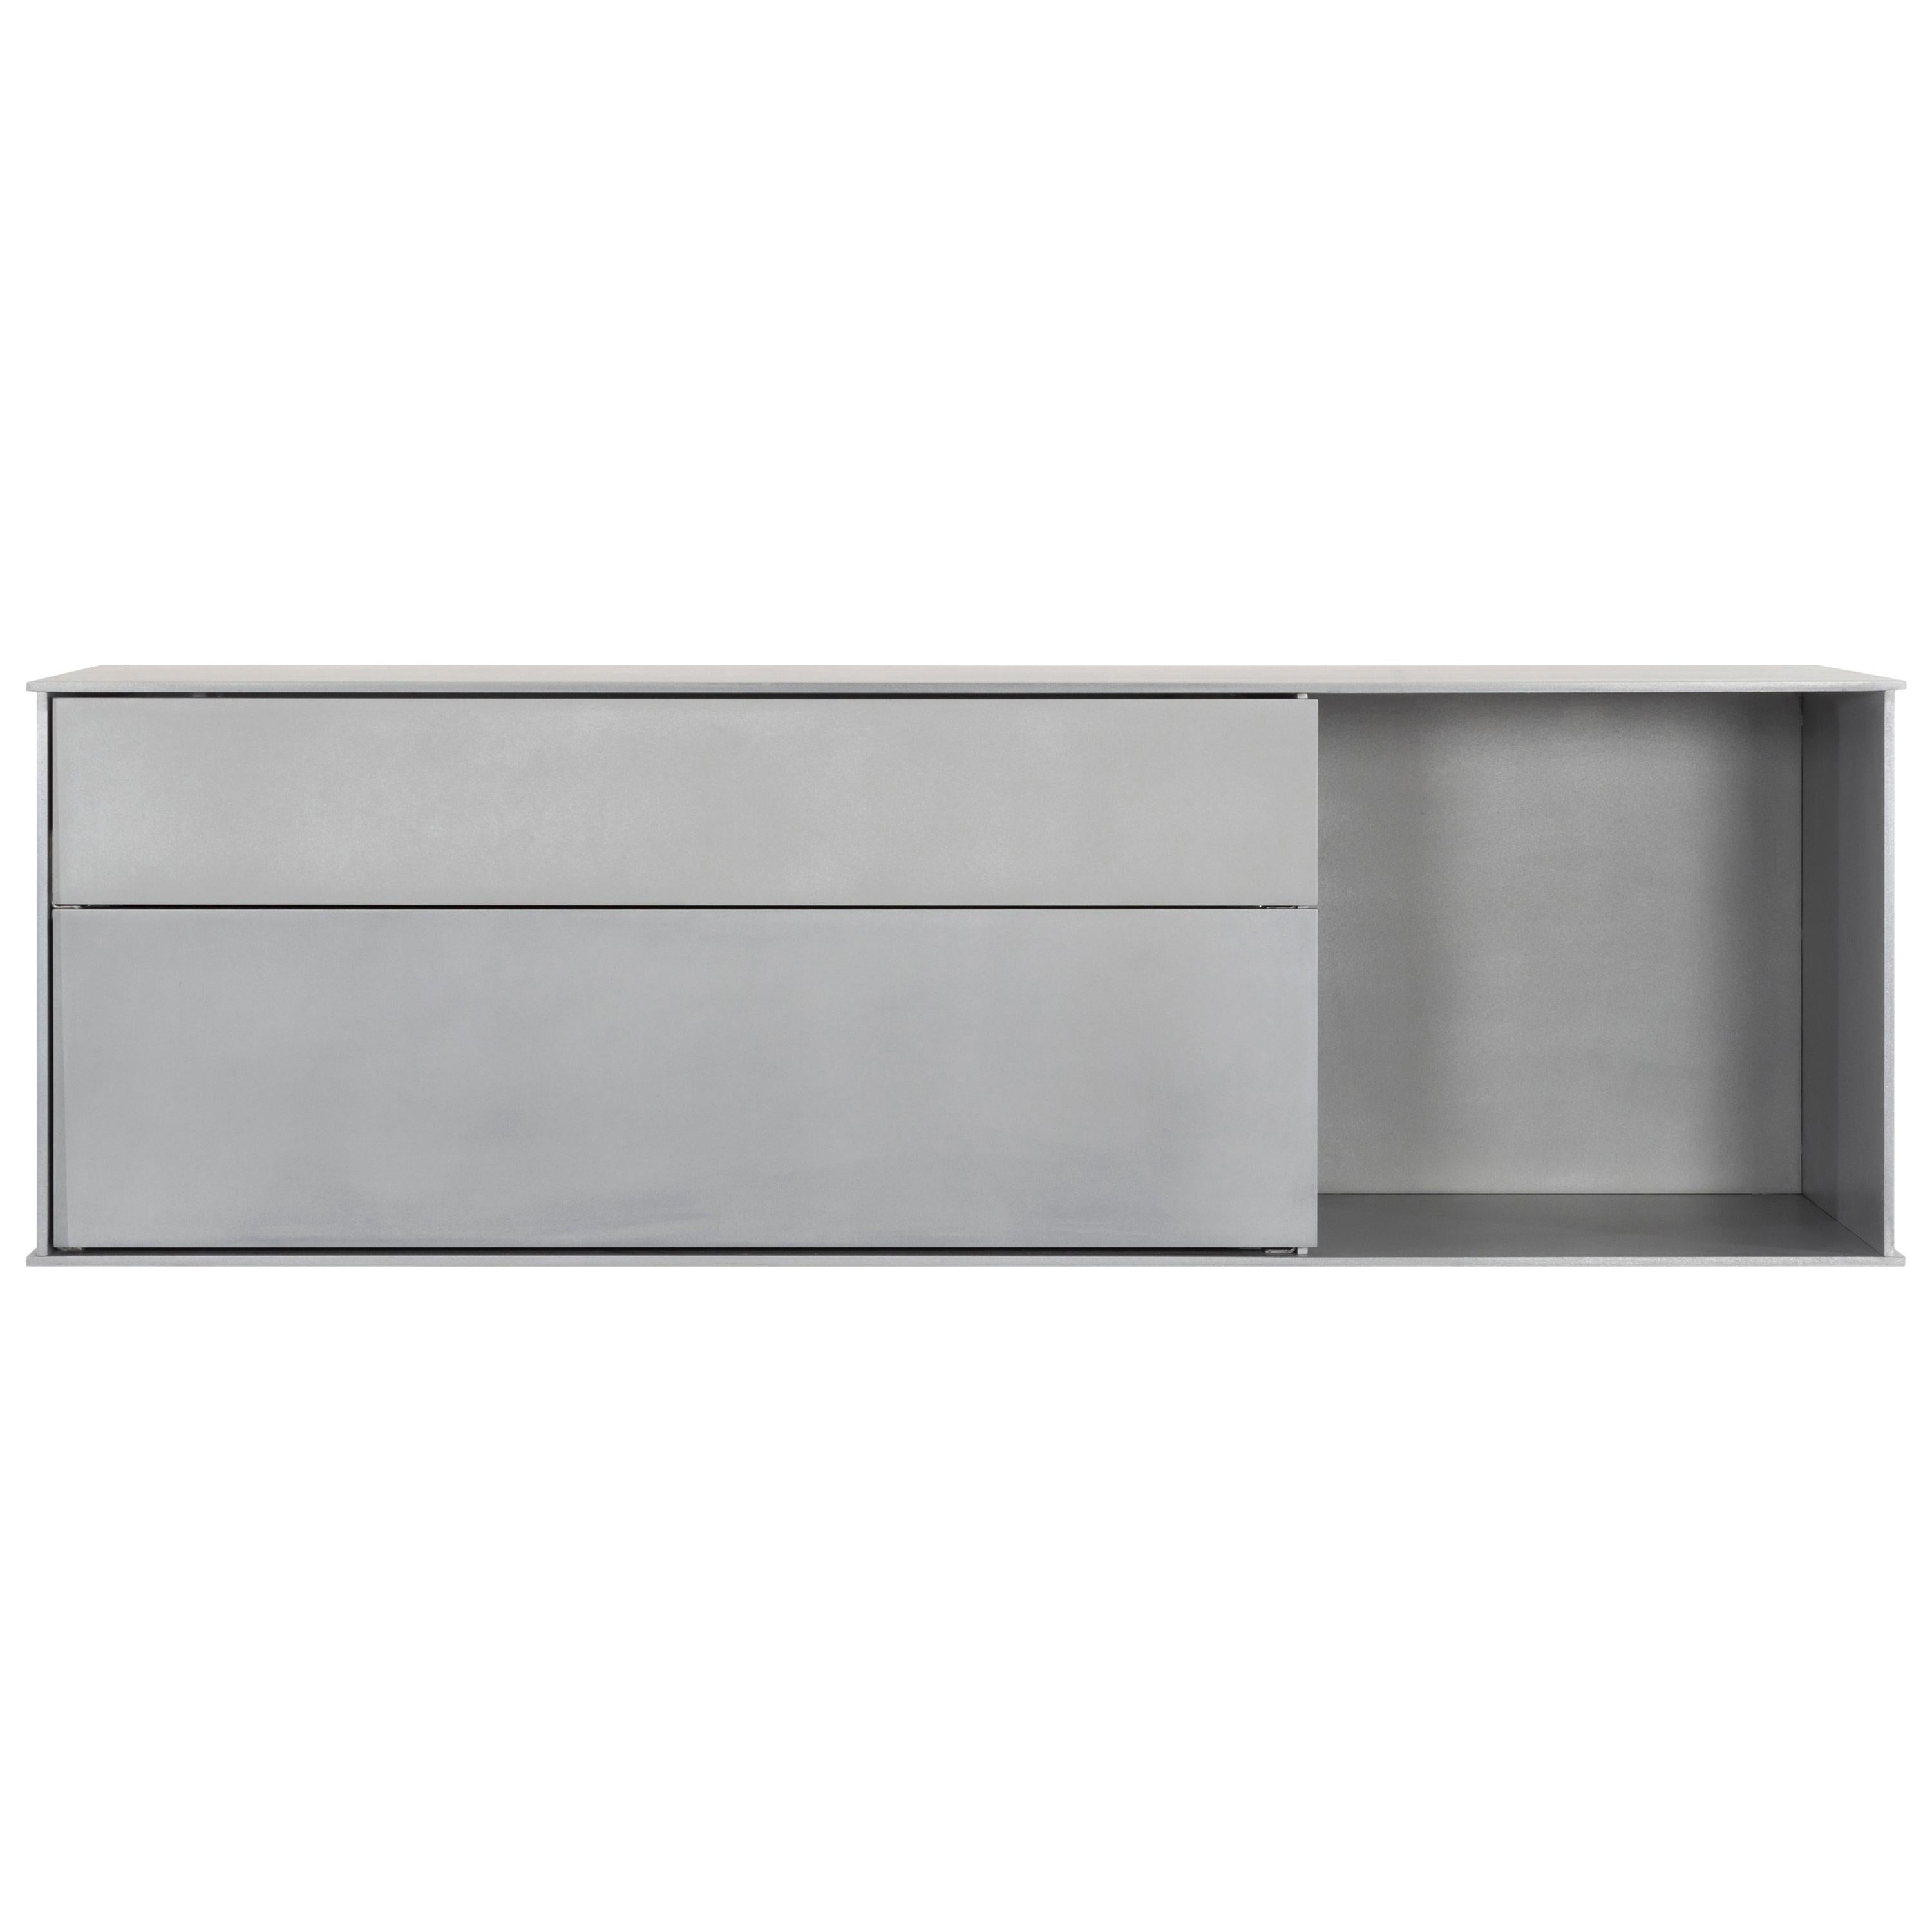 OG-Wandregal mit Schubladen in gewachstem Aluminiumblech von Jonathan Nesci im Angebot